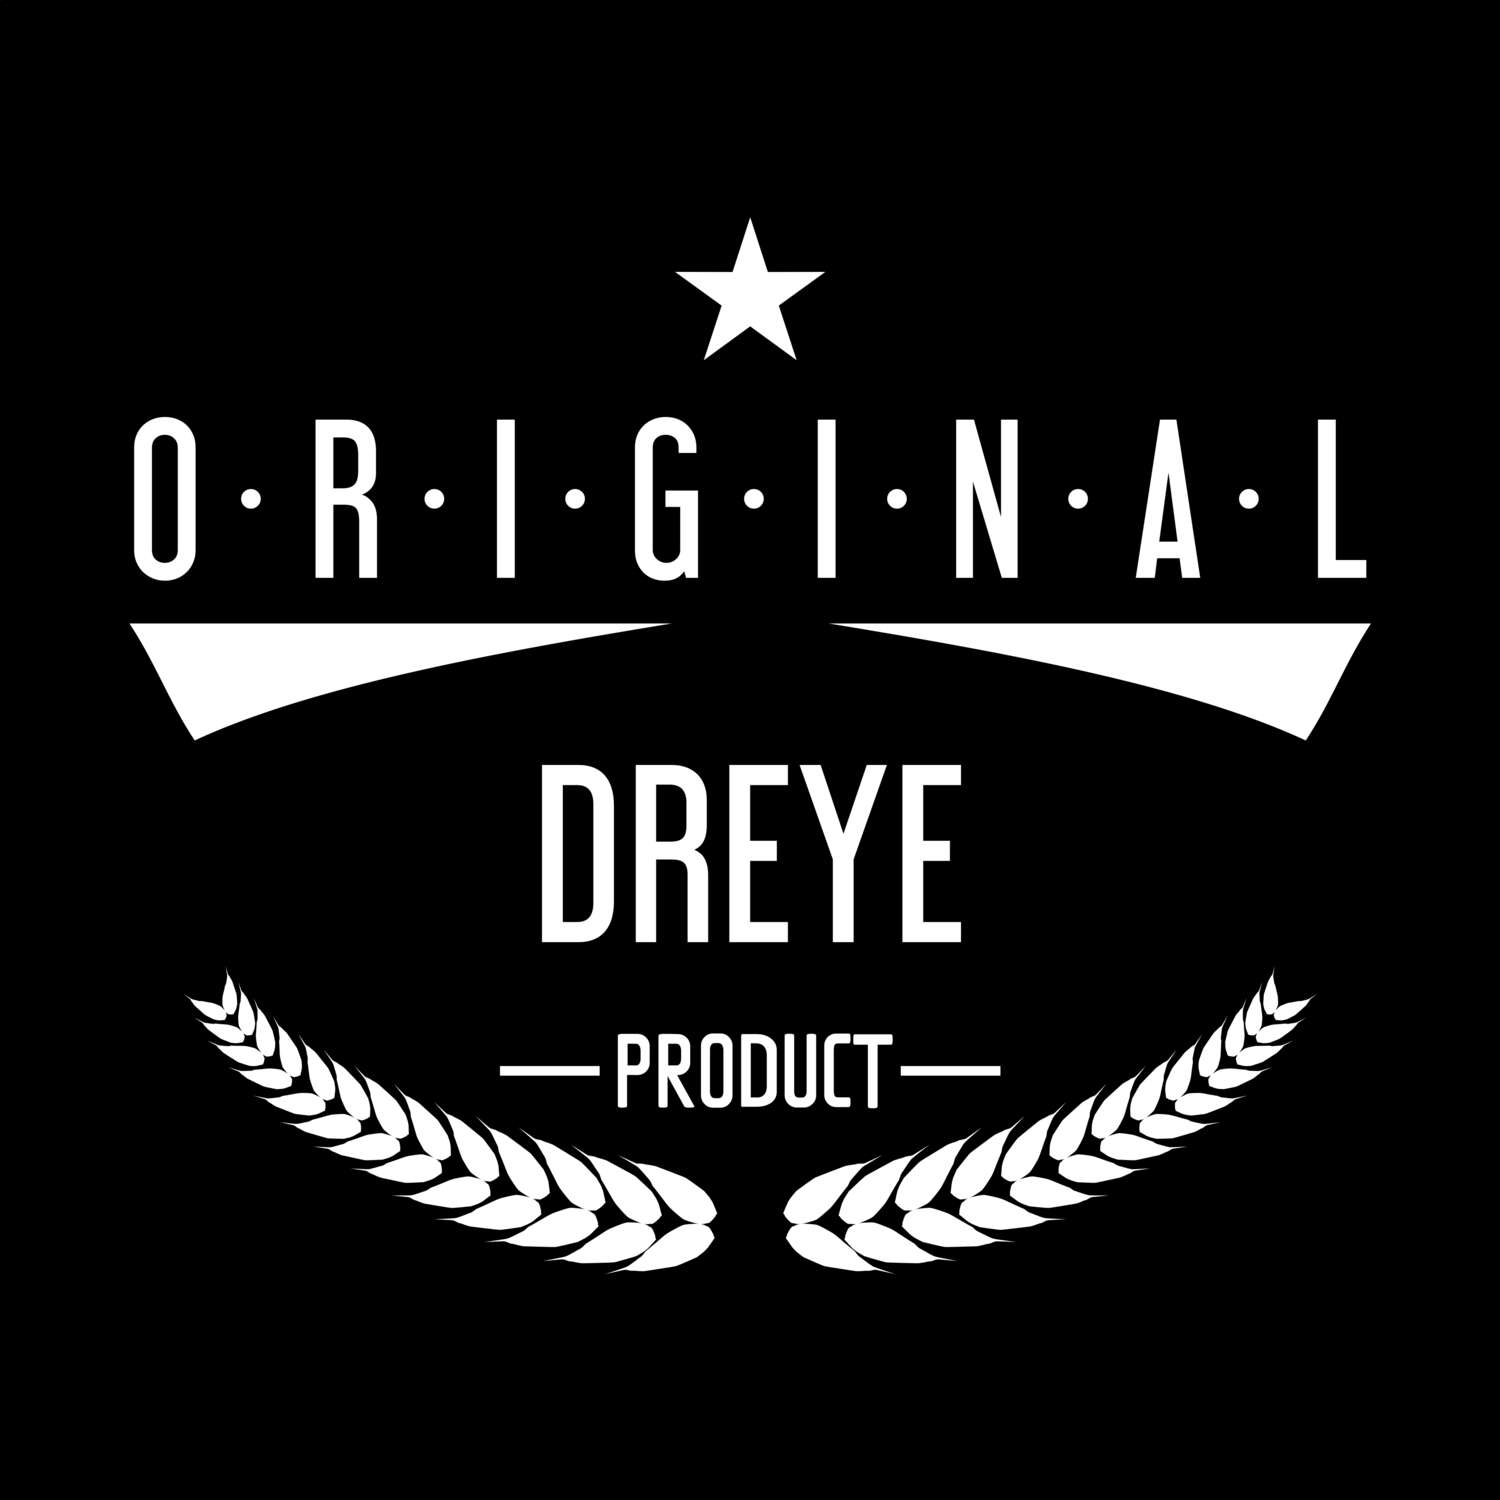 Dreye T-Shirt »Original Product«